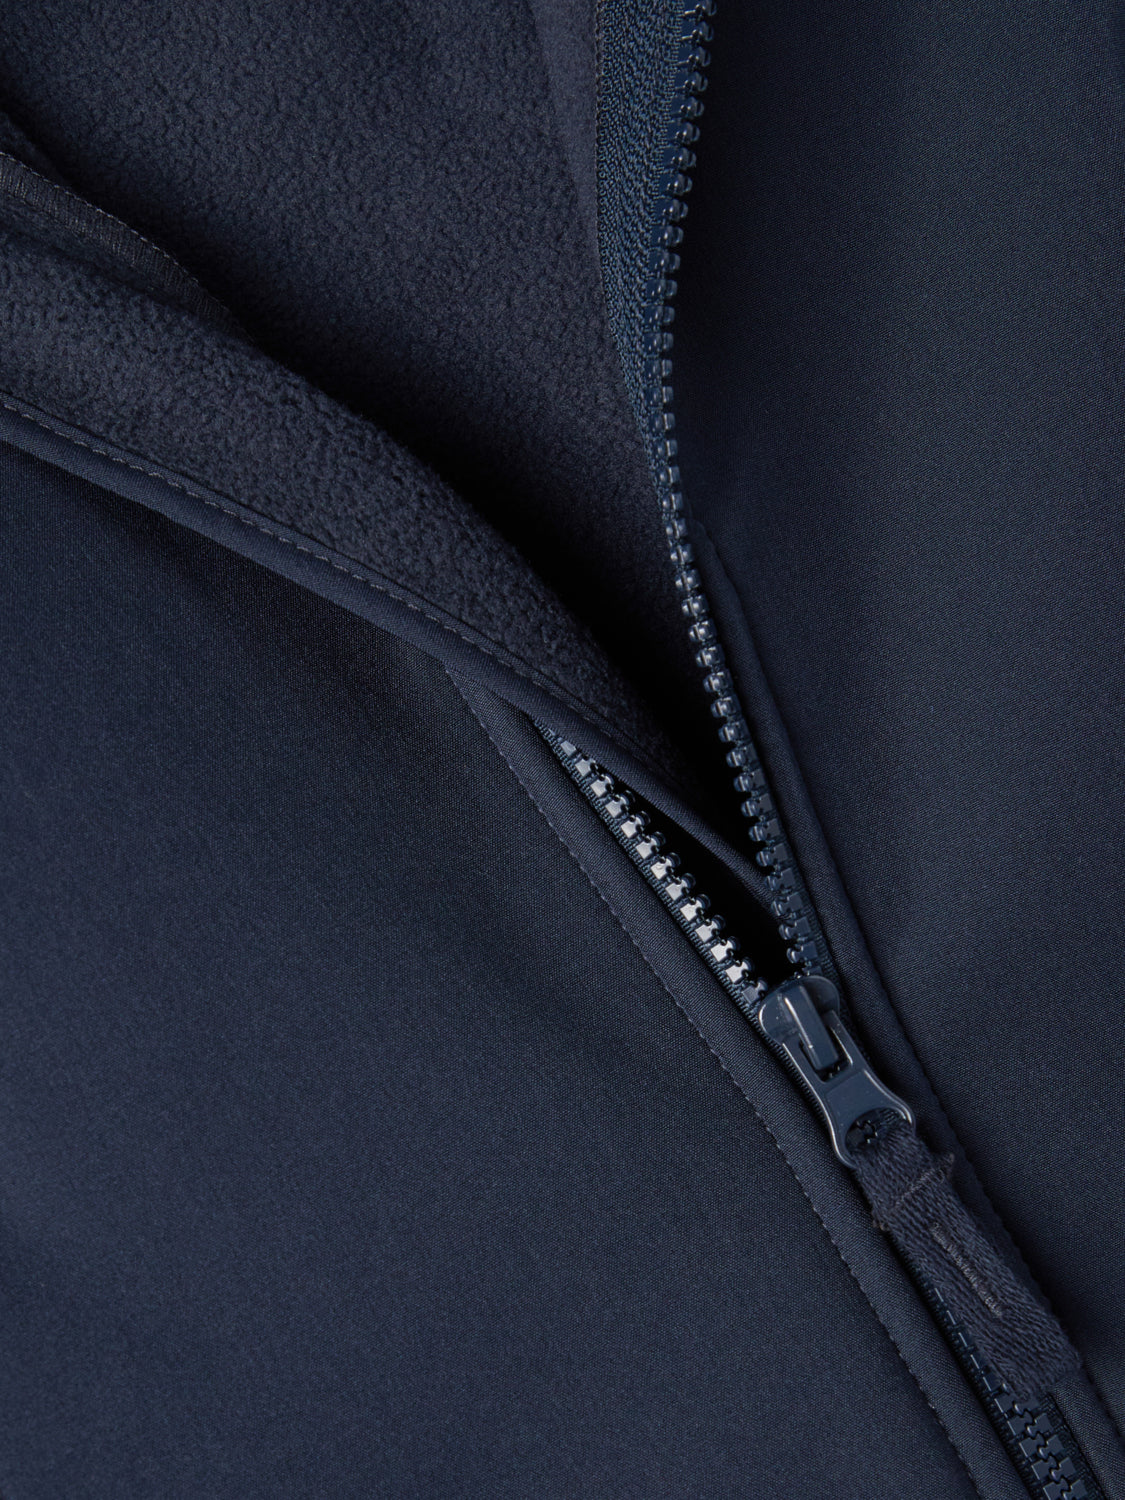 NKMALFA Outerwear - Dark Sapphire